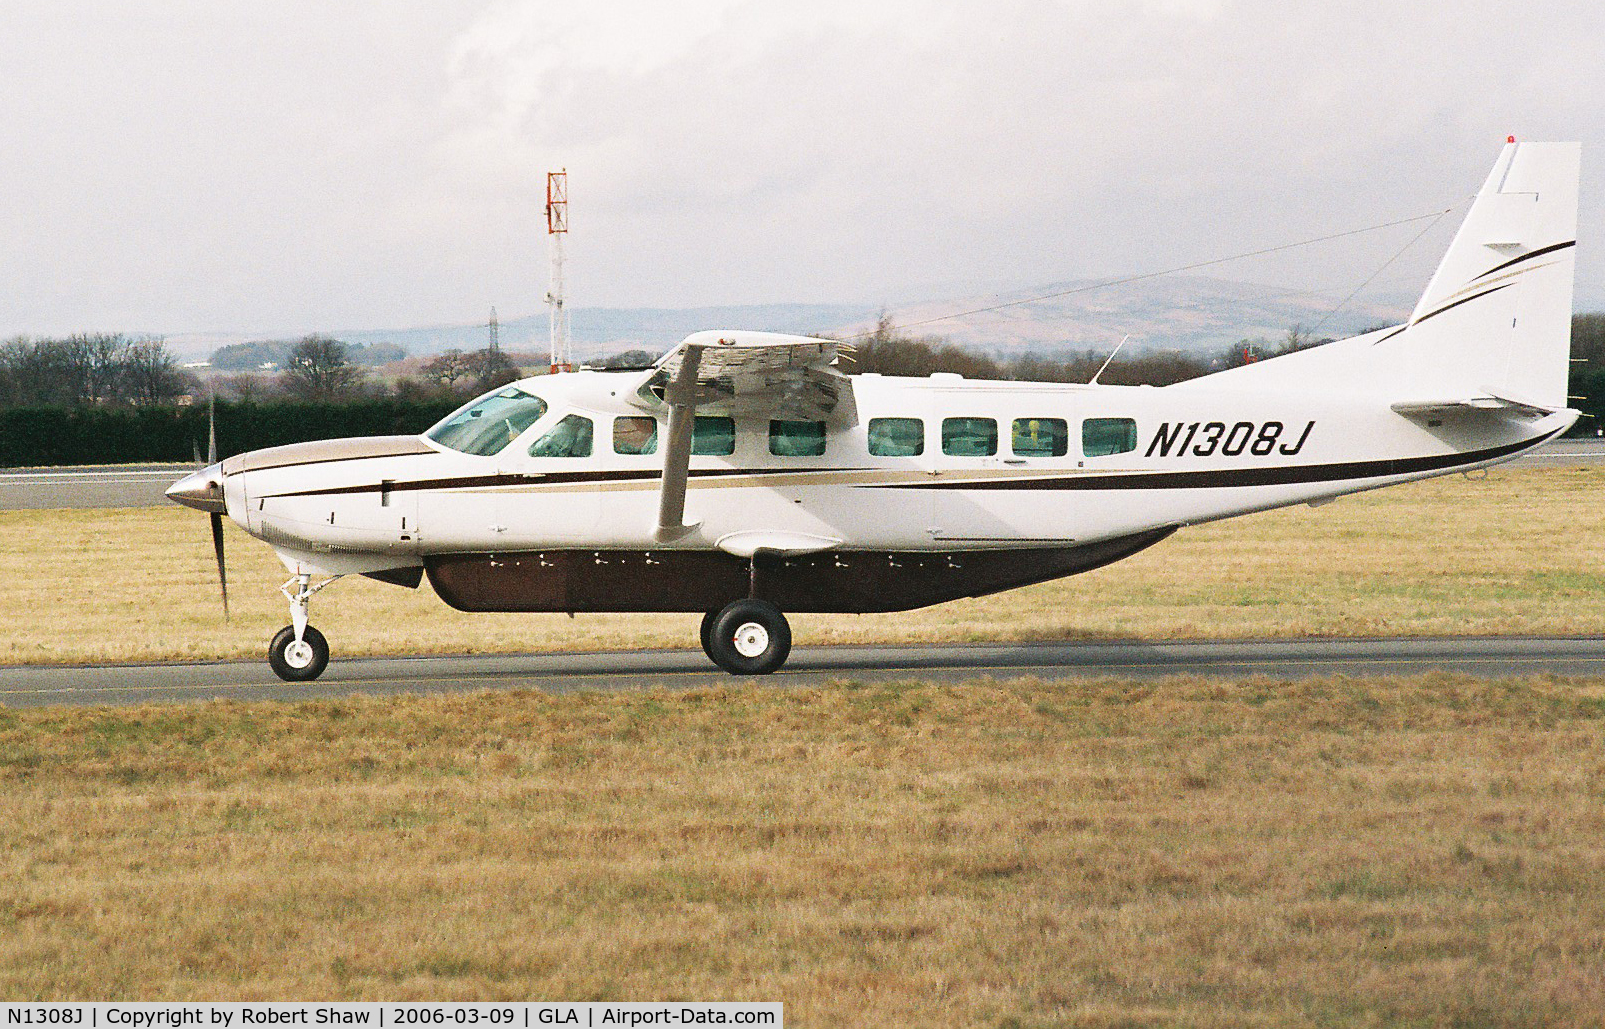 N1308J, 2005 Cessna 208B C/N 208B1163, Taxiing at Glasgow International Airport